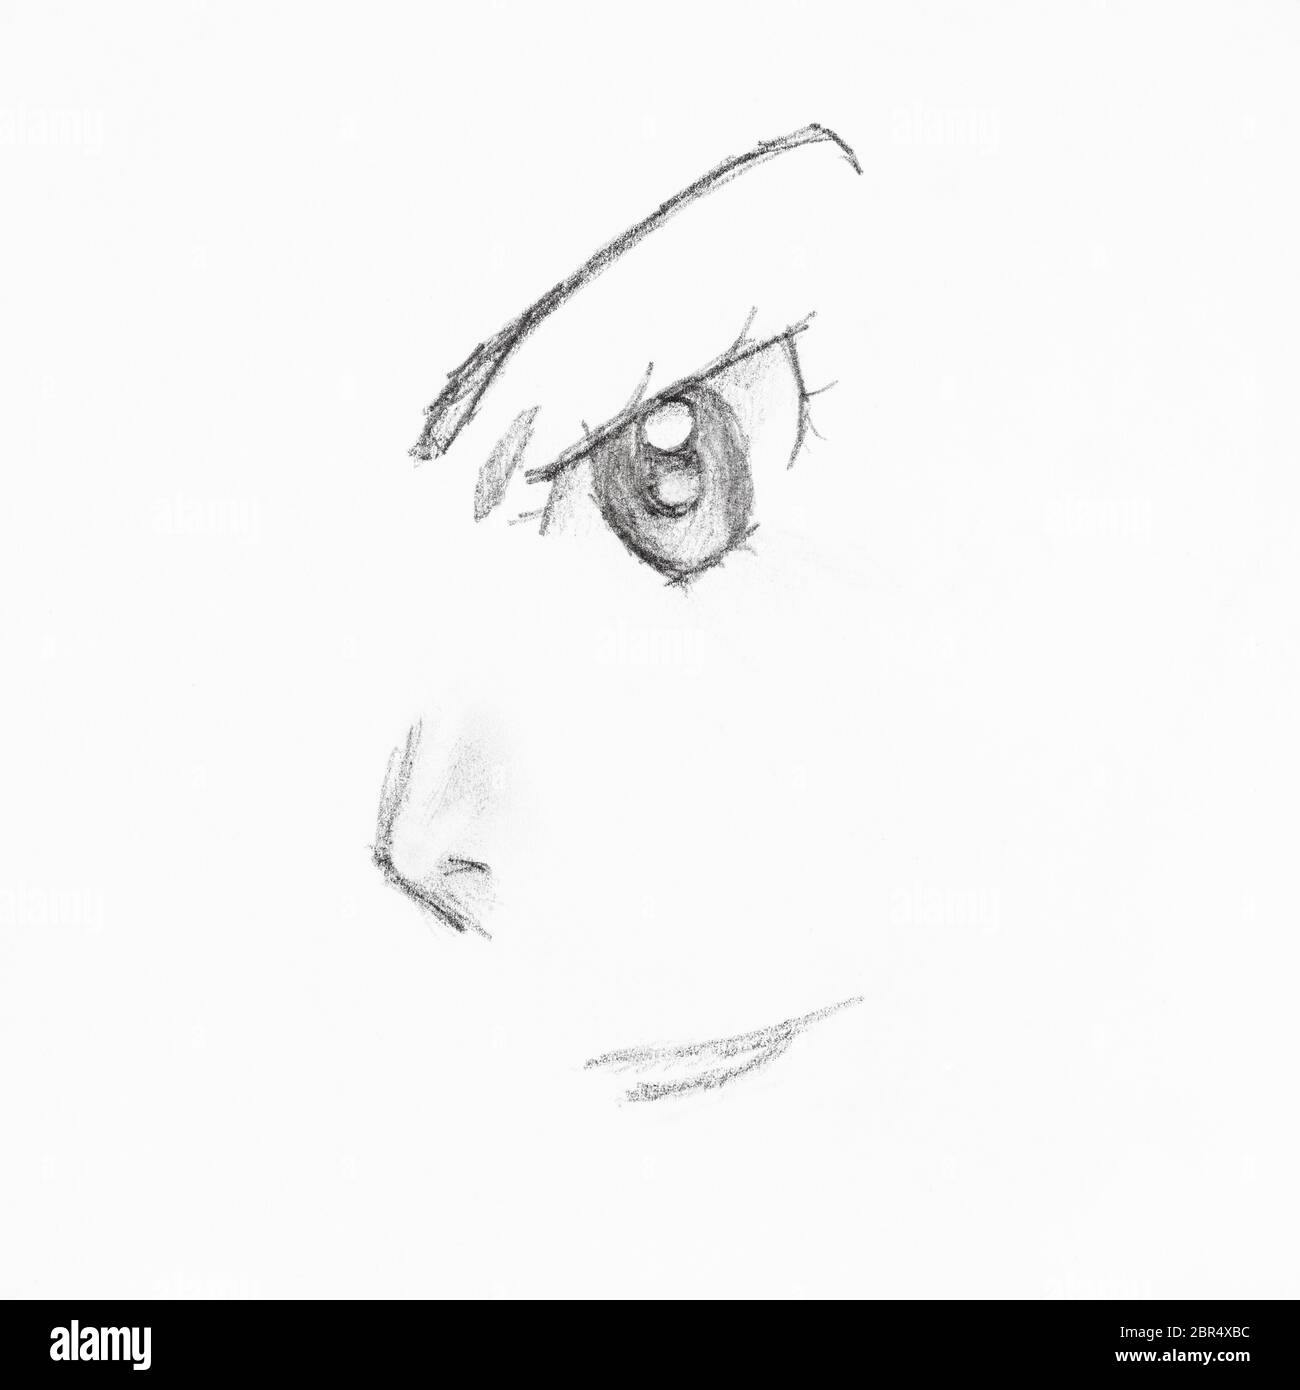 Beginner's Anime-eye tutorial using SAI by KittyCouch | Digital art  beginner, Digital art tutorial, Digital painting tutorials